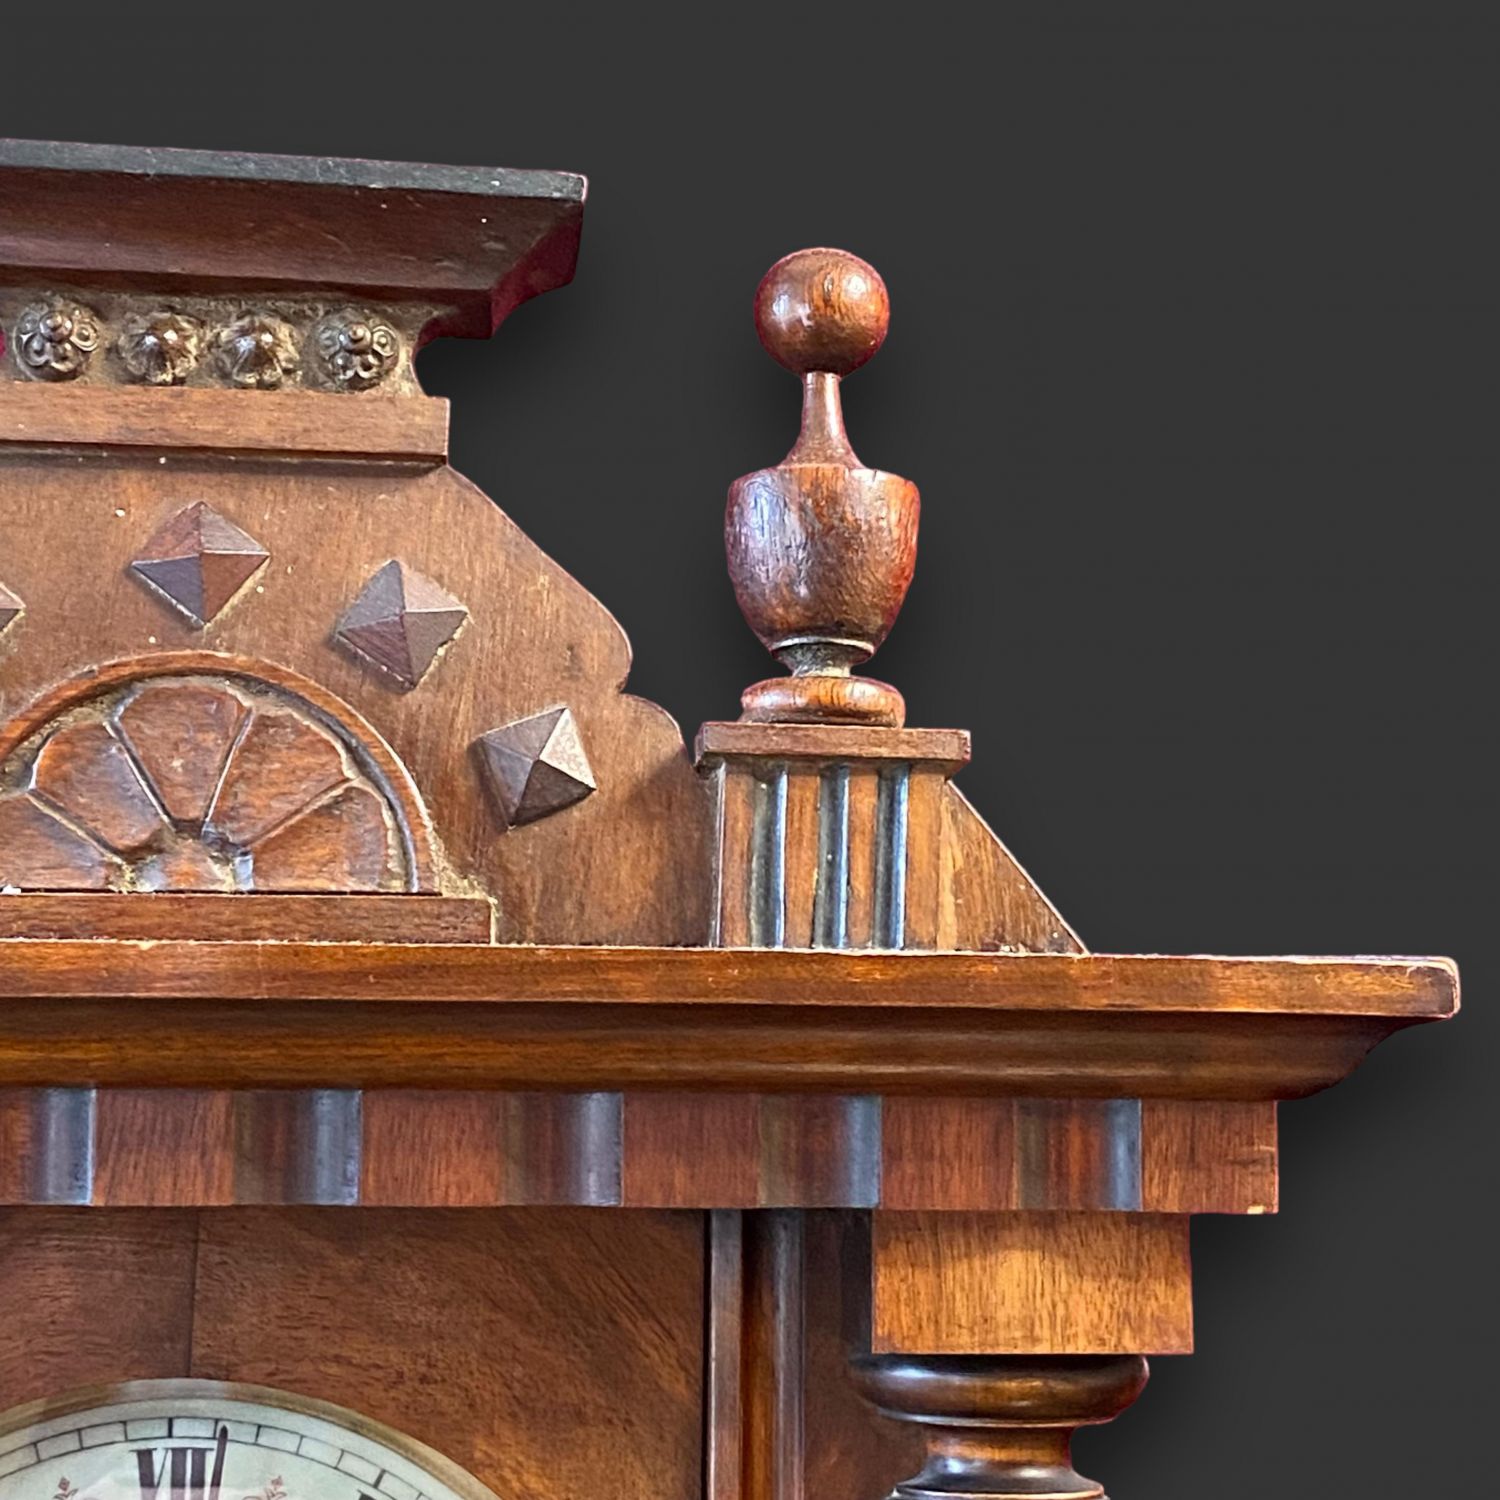 Antique RA Pendulum Wall Clock by Thomas Haller (est. made between